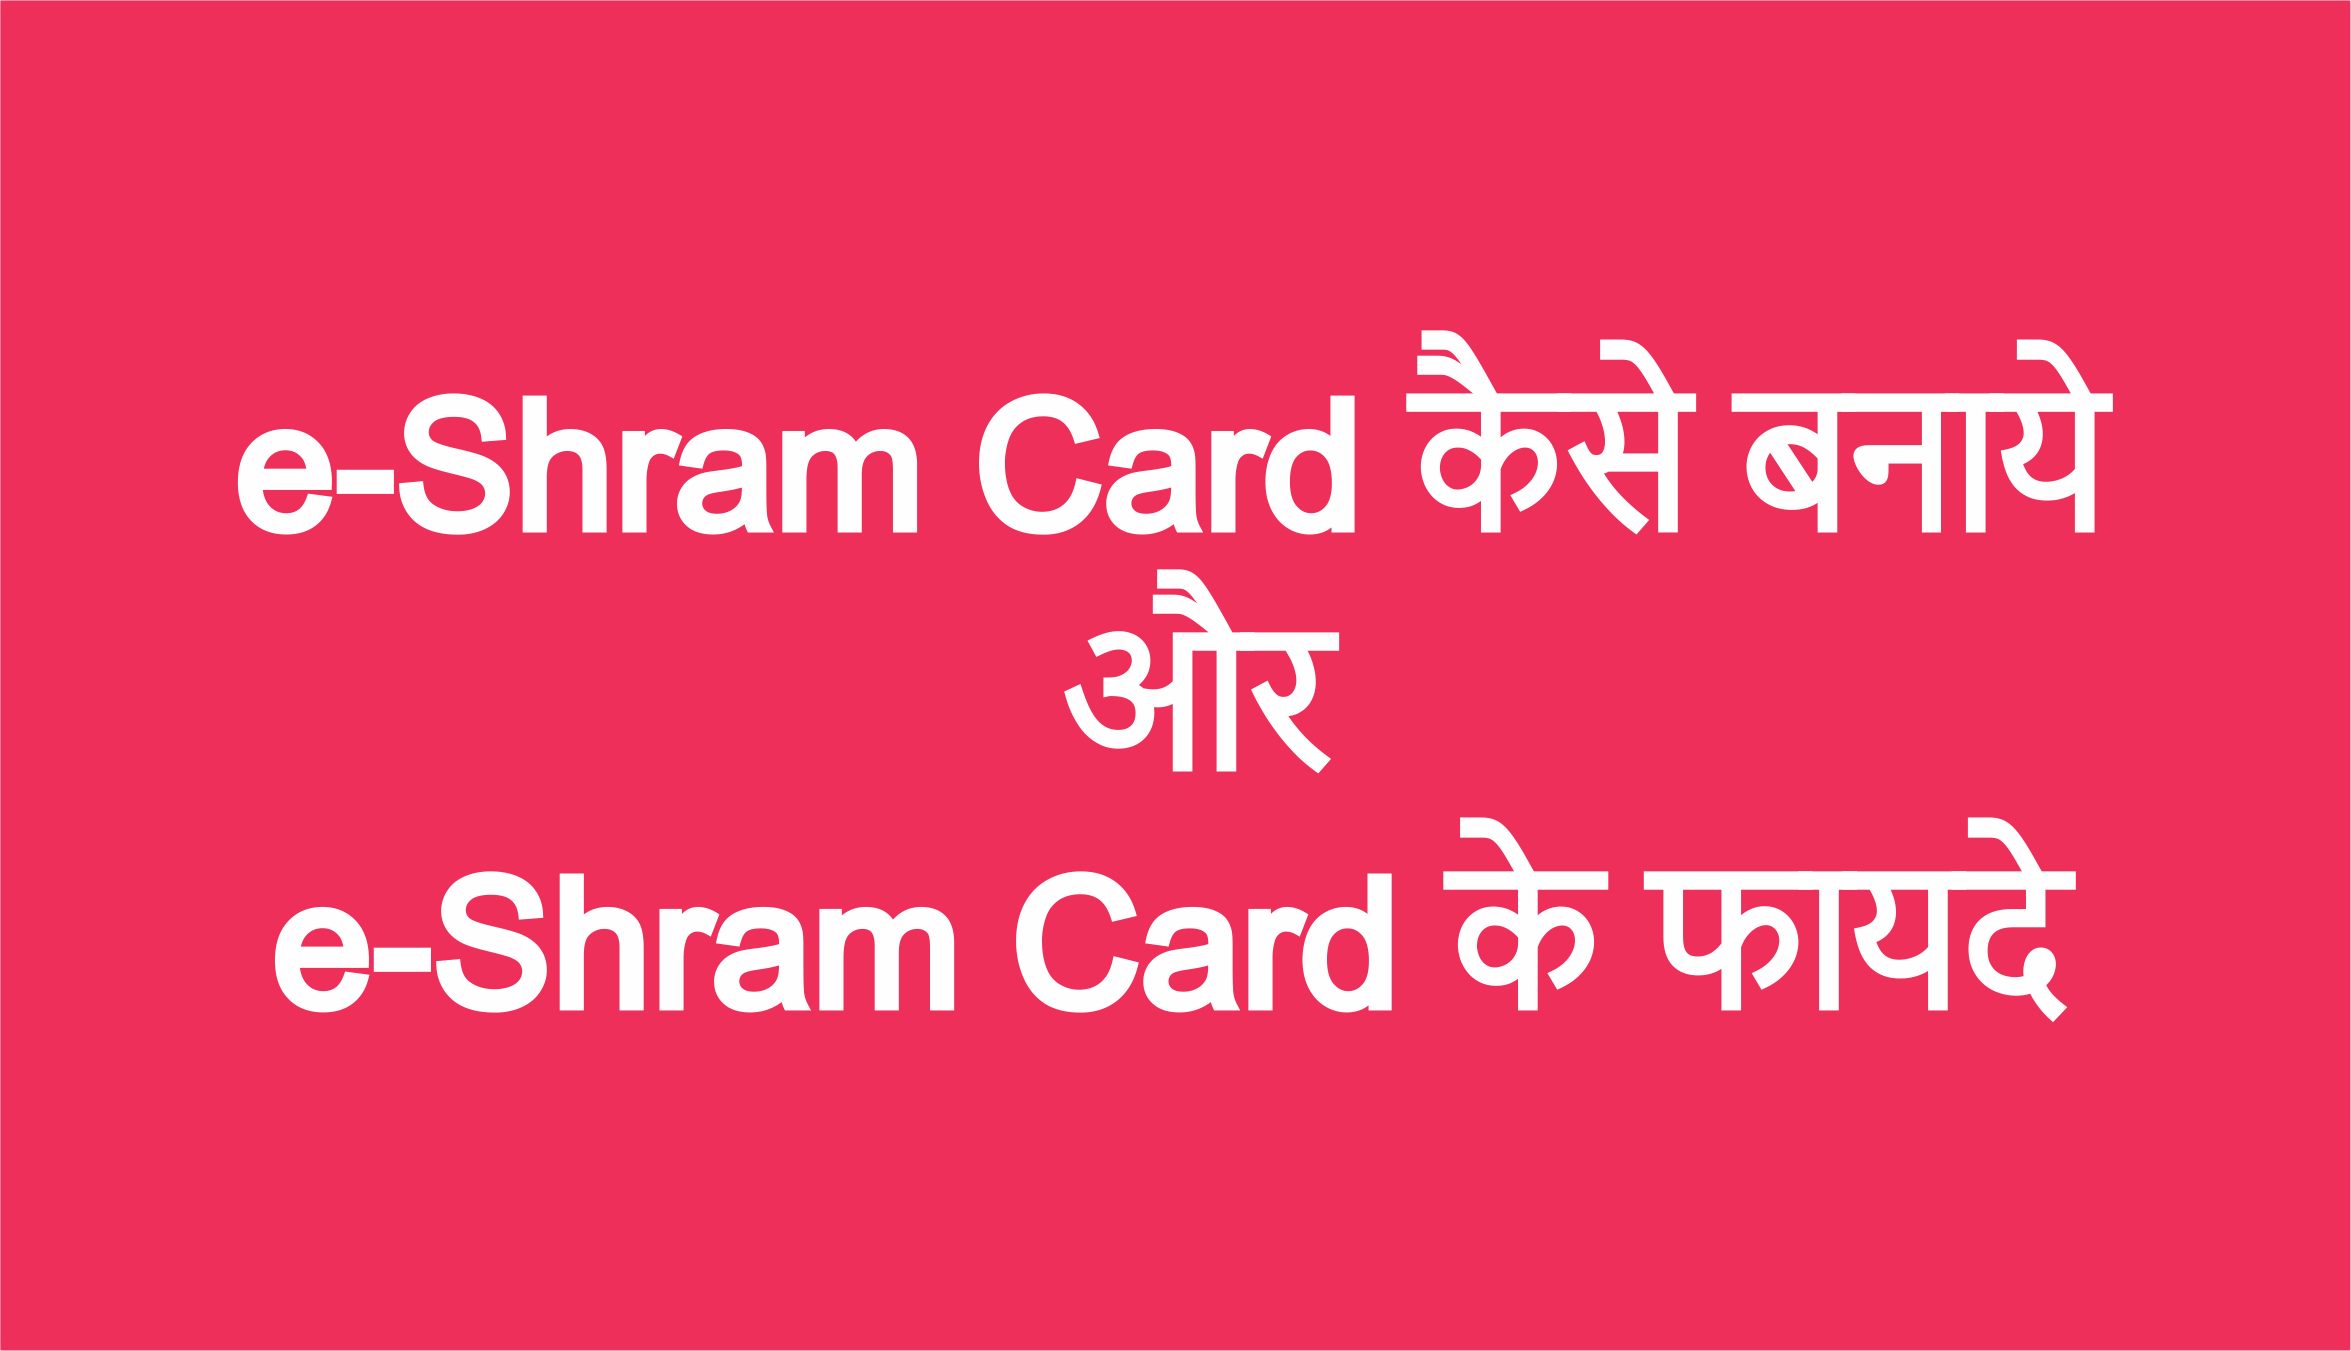 e-Shram Card kaise banaye